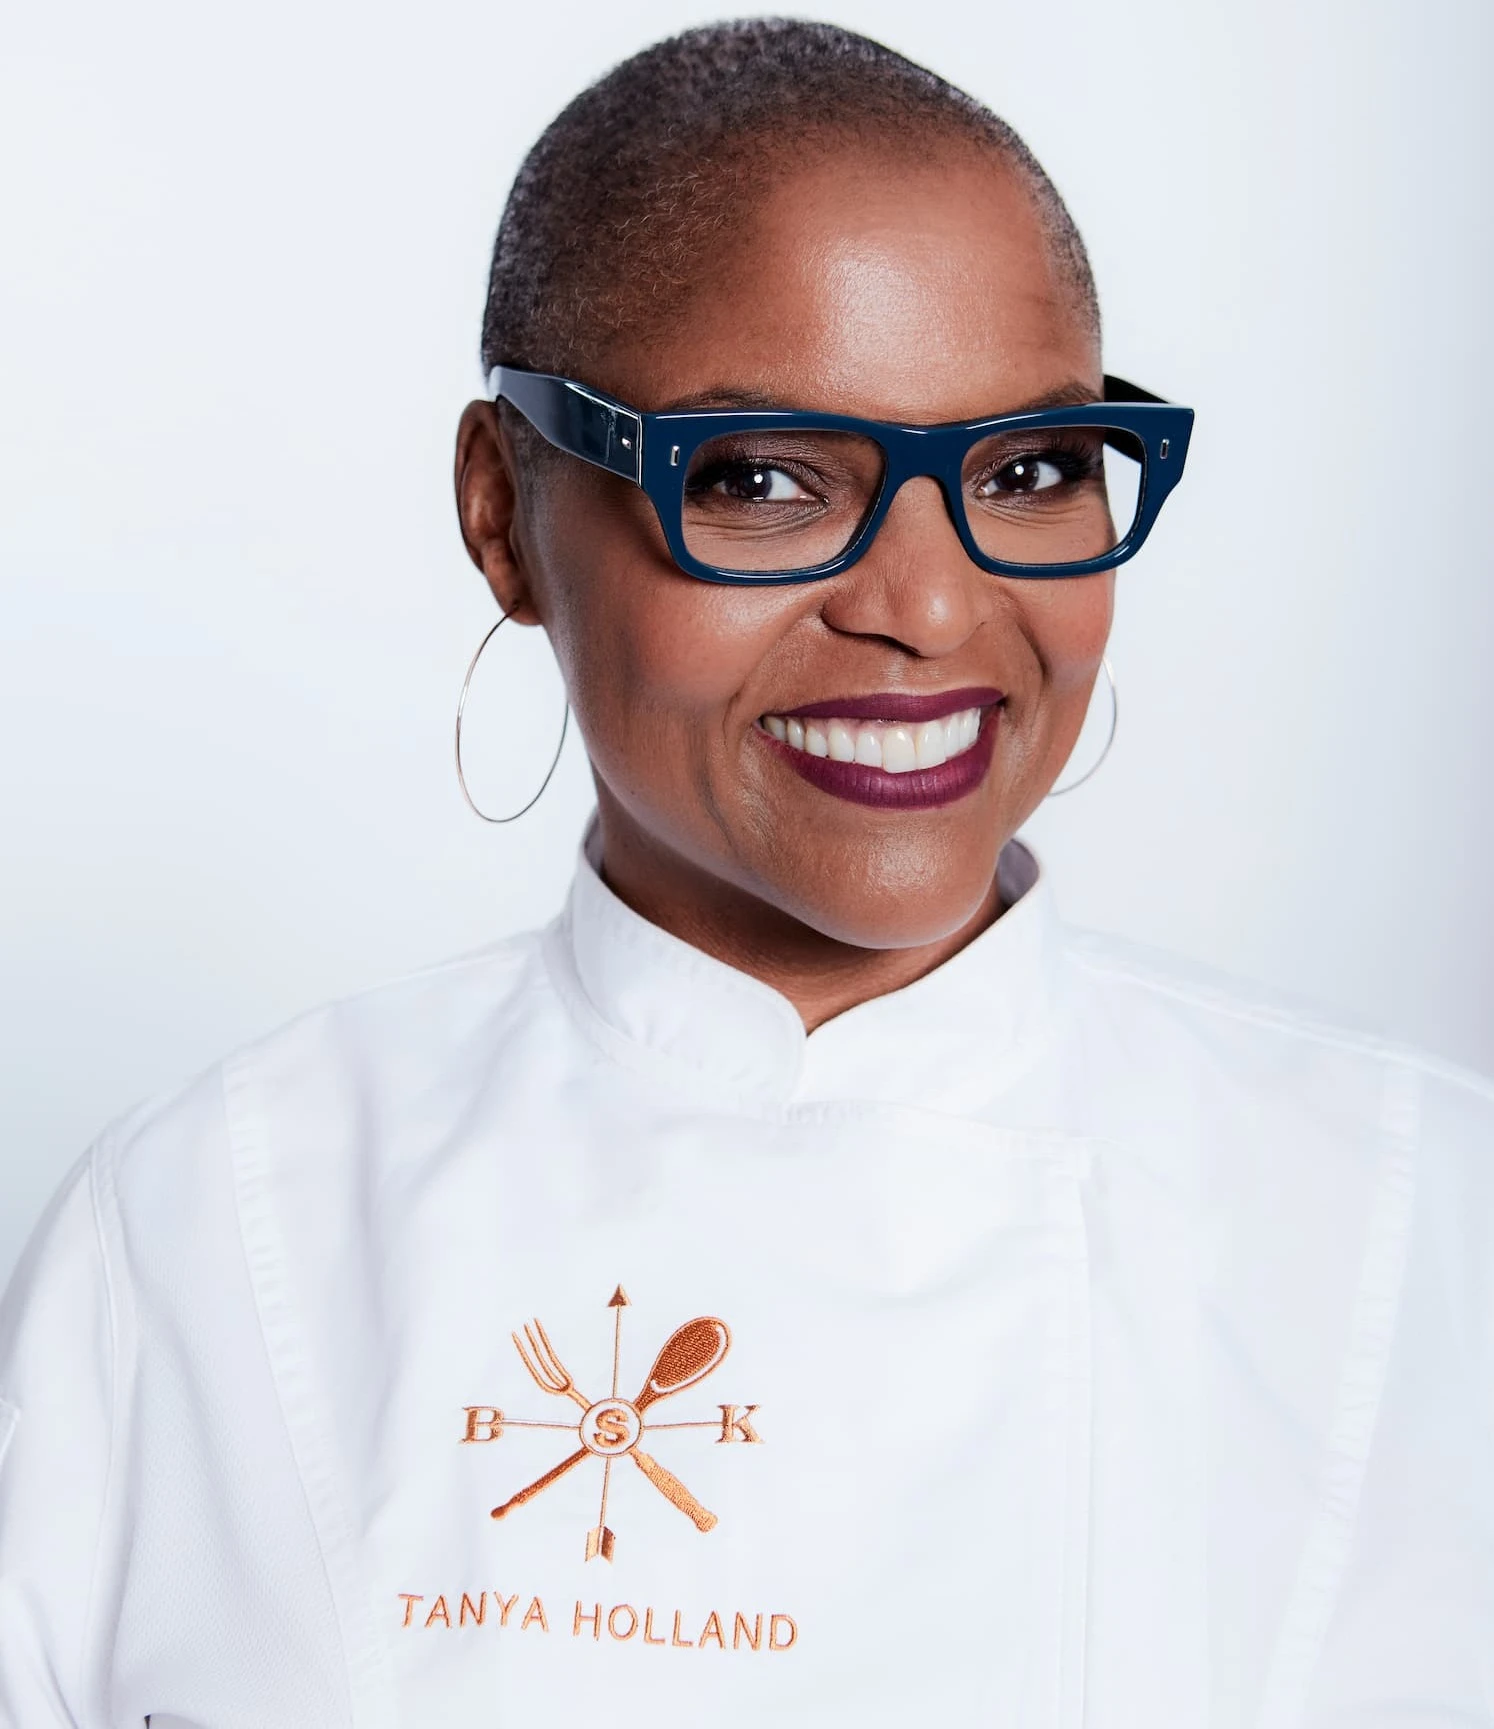 Headshot of Chef Tanya Holland smiling